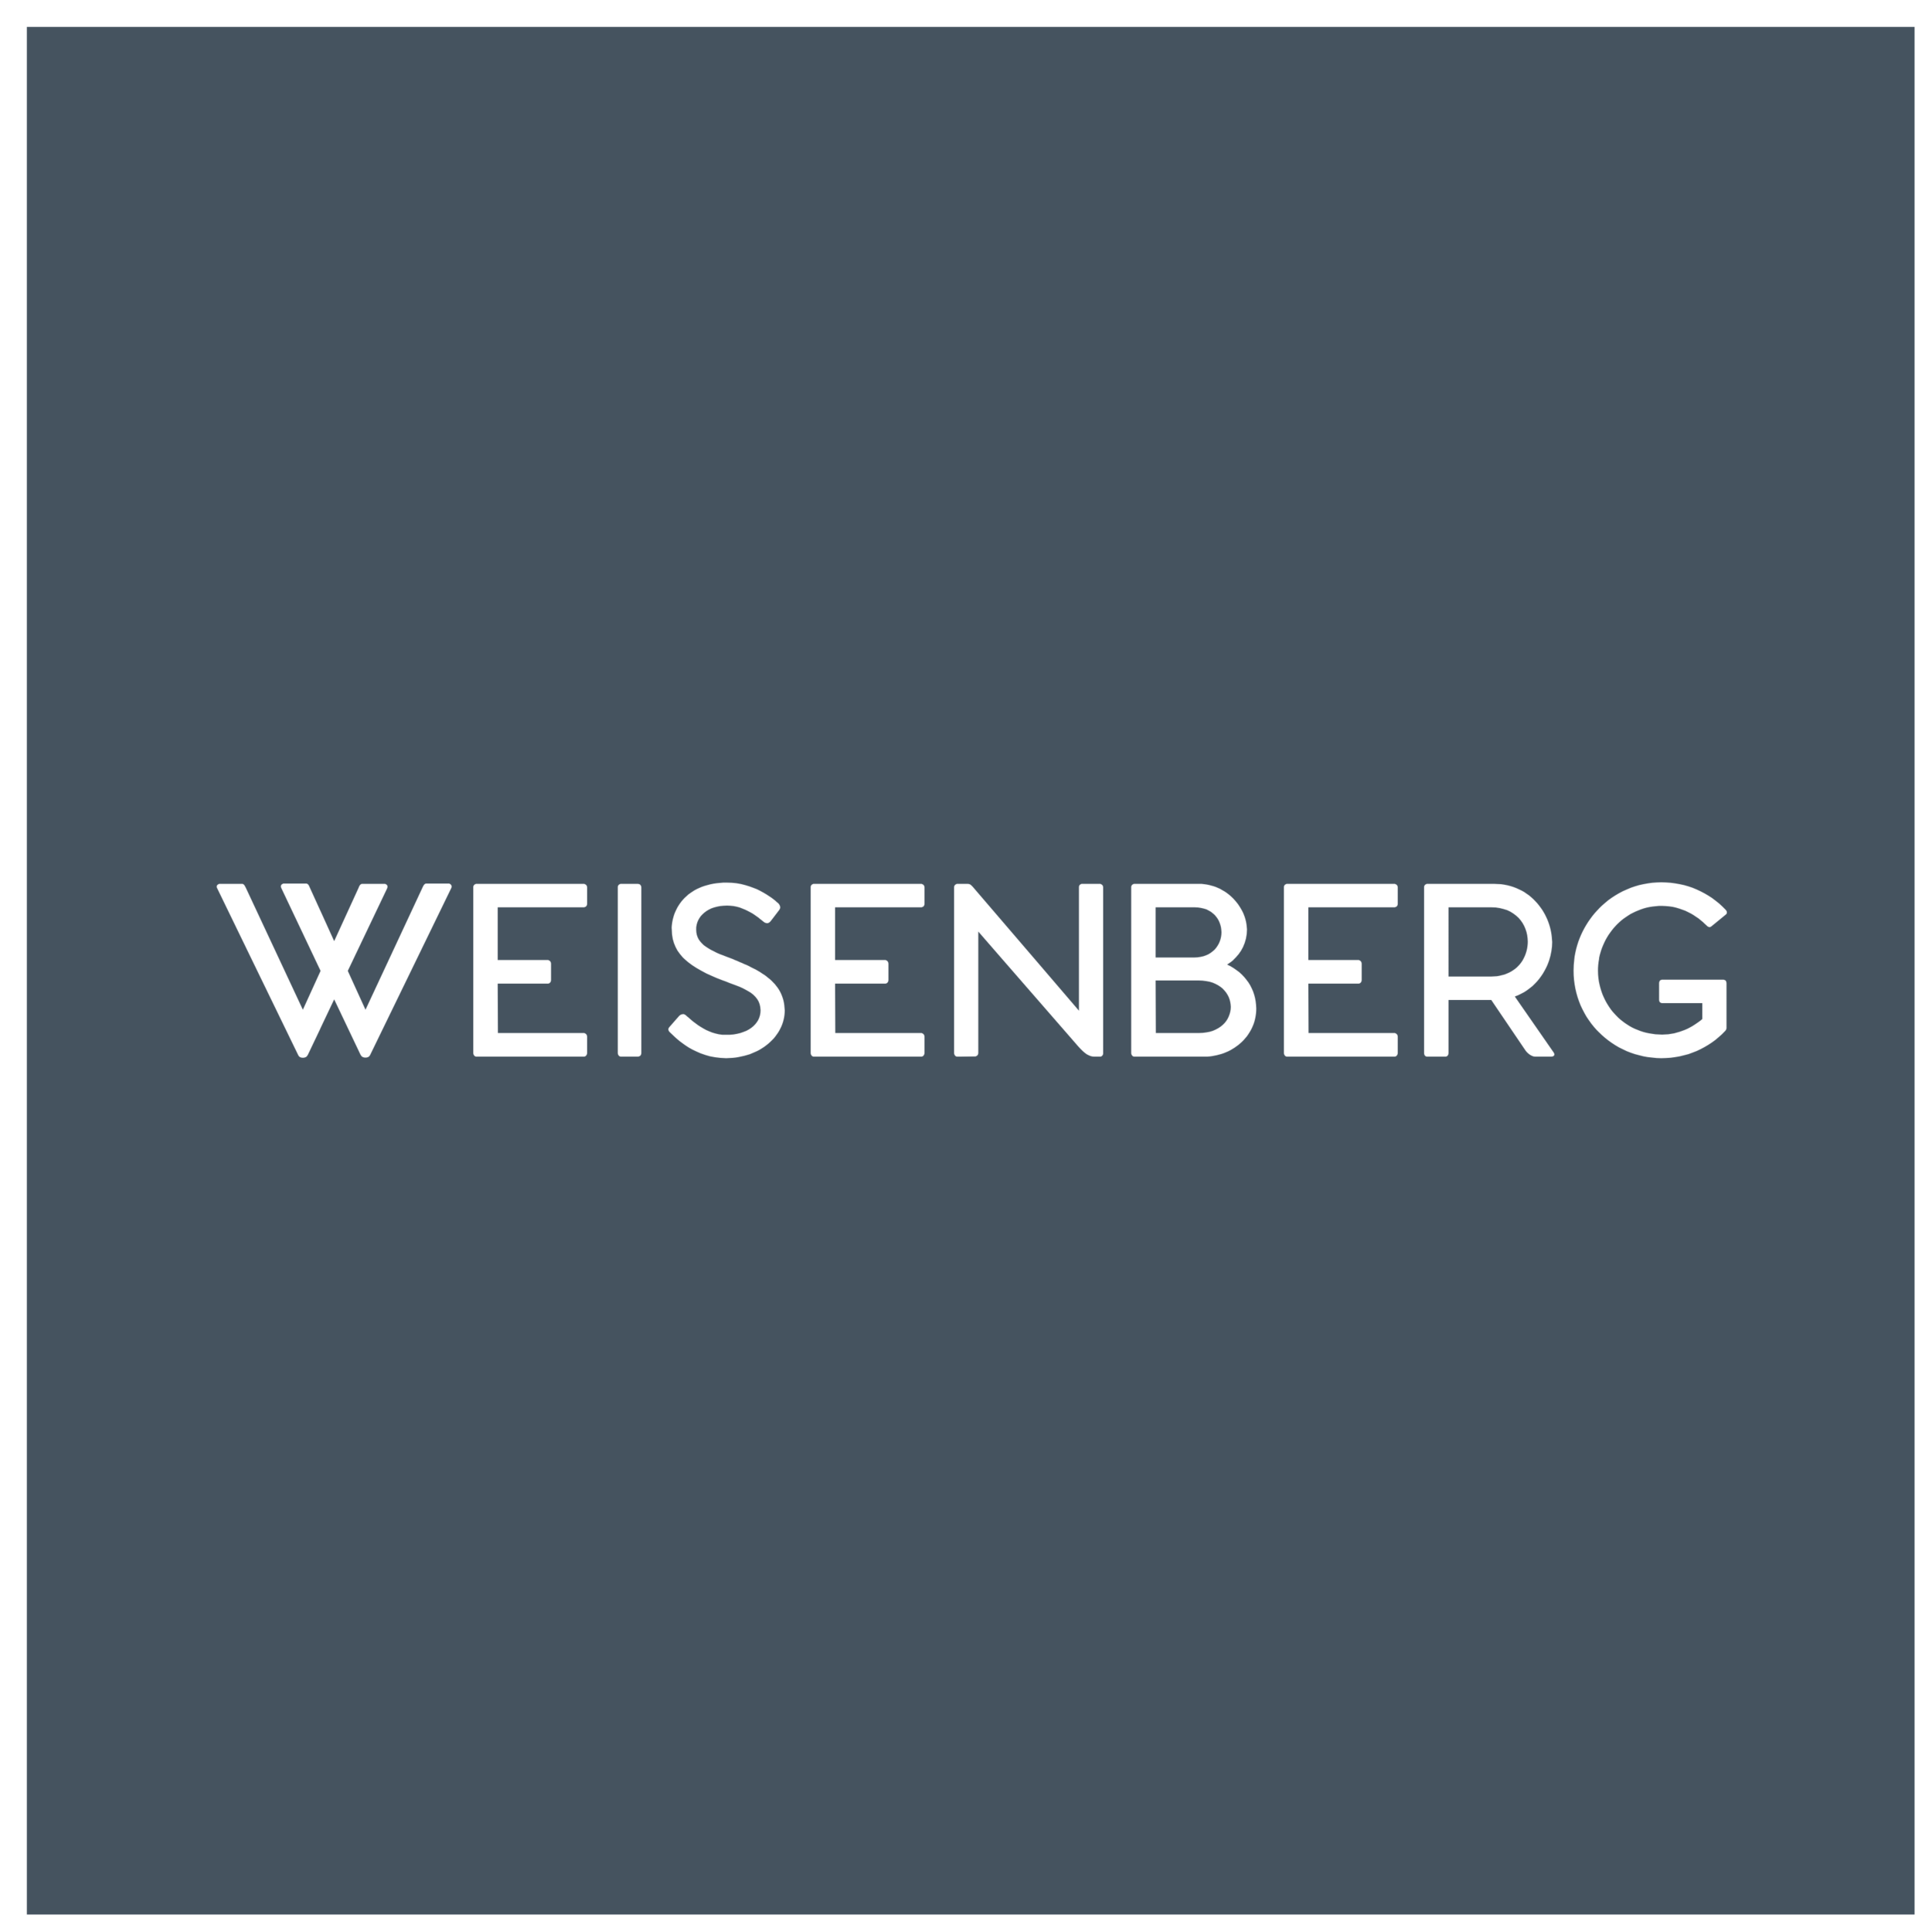 Weisenberg Firm